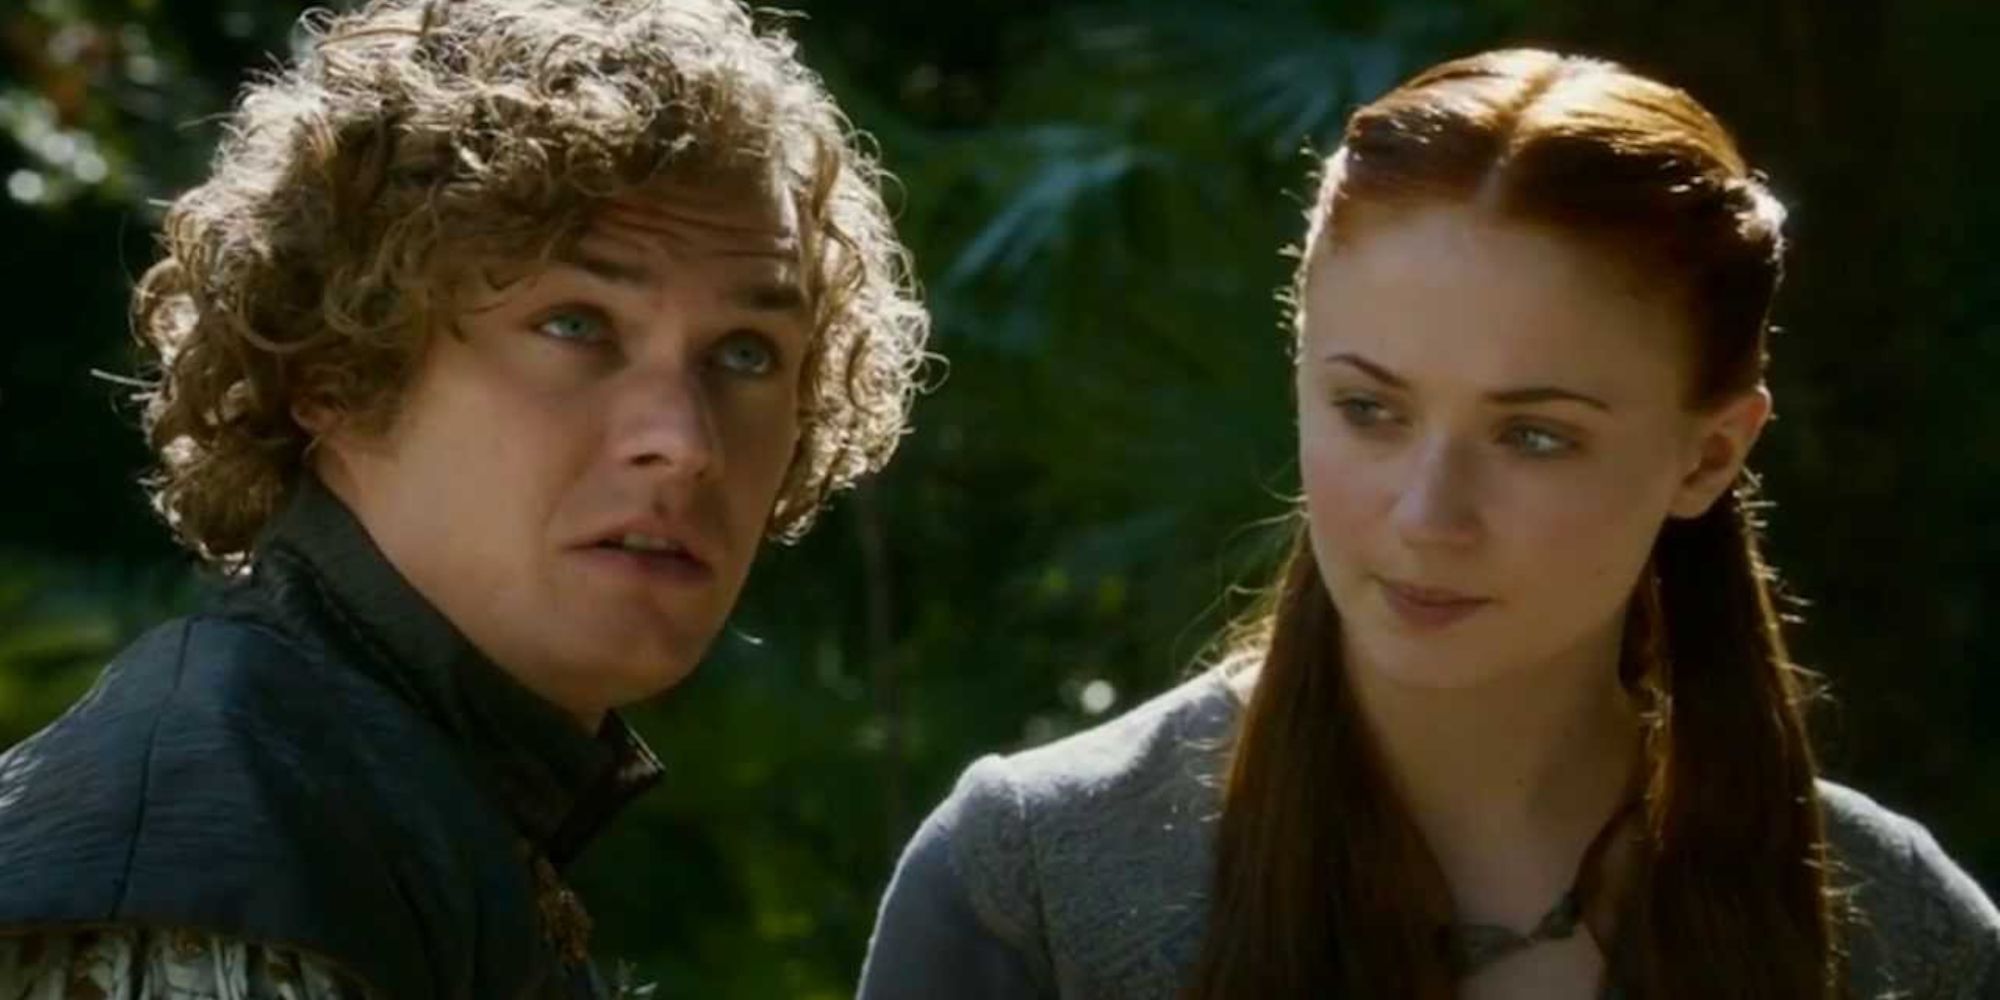 Loras and Sansa speak in the King's Landing gardens in Game of Thrones